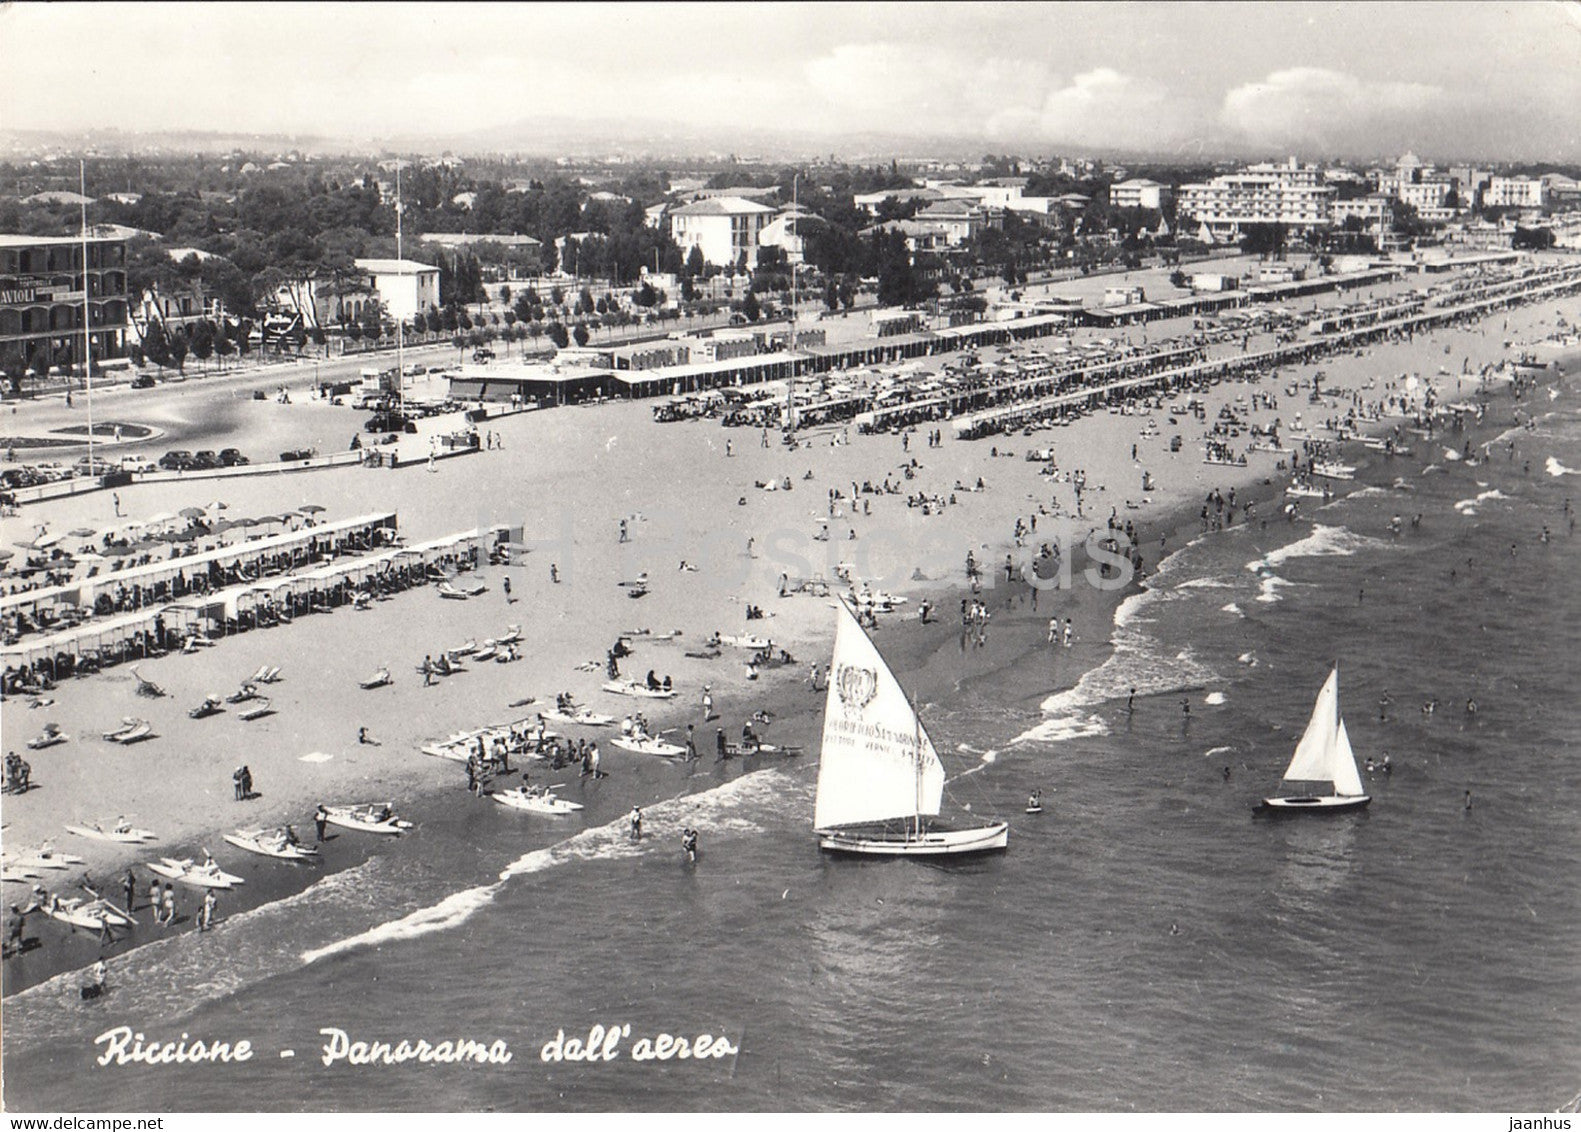 Riccione - Panorama dall aereo - Panorama from air - sailing boat - beach - 1960 - Italy - used - JH Postcards